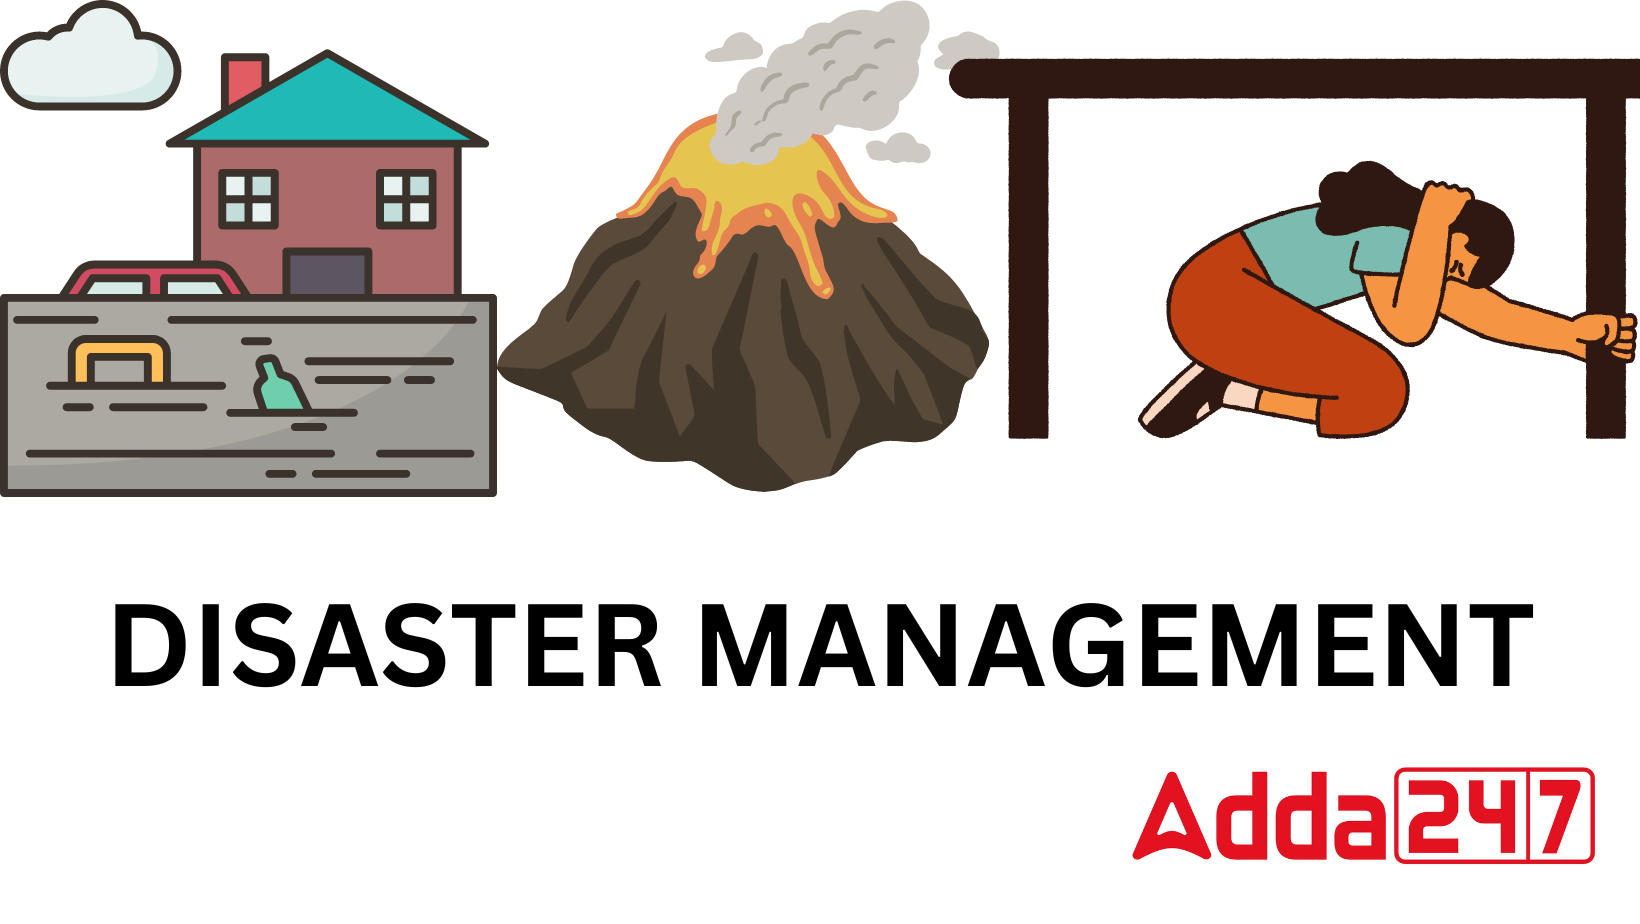 make an assignment on disaster management